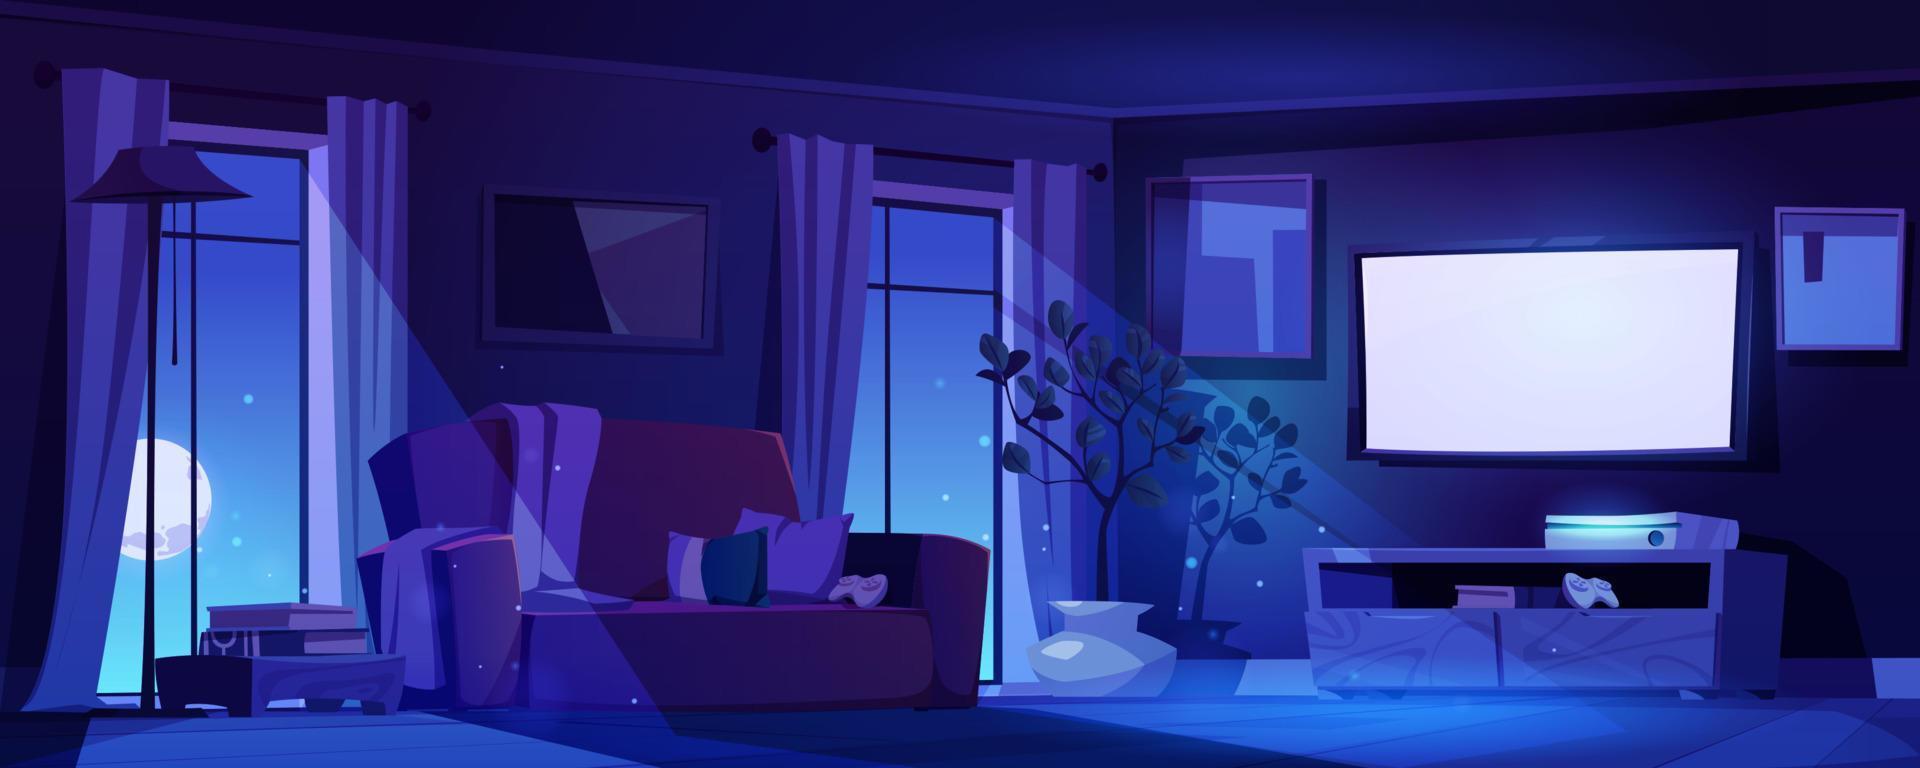 interior de la sala de estar nocturna a la luz de la luna, hogar vector